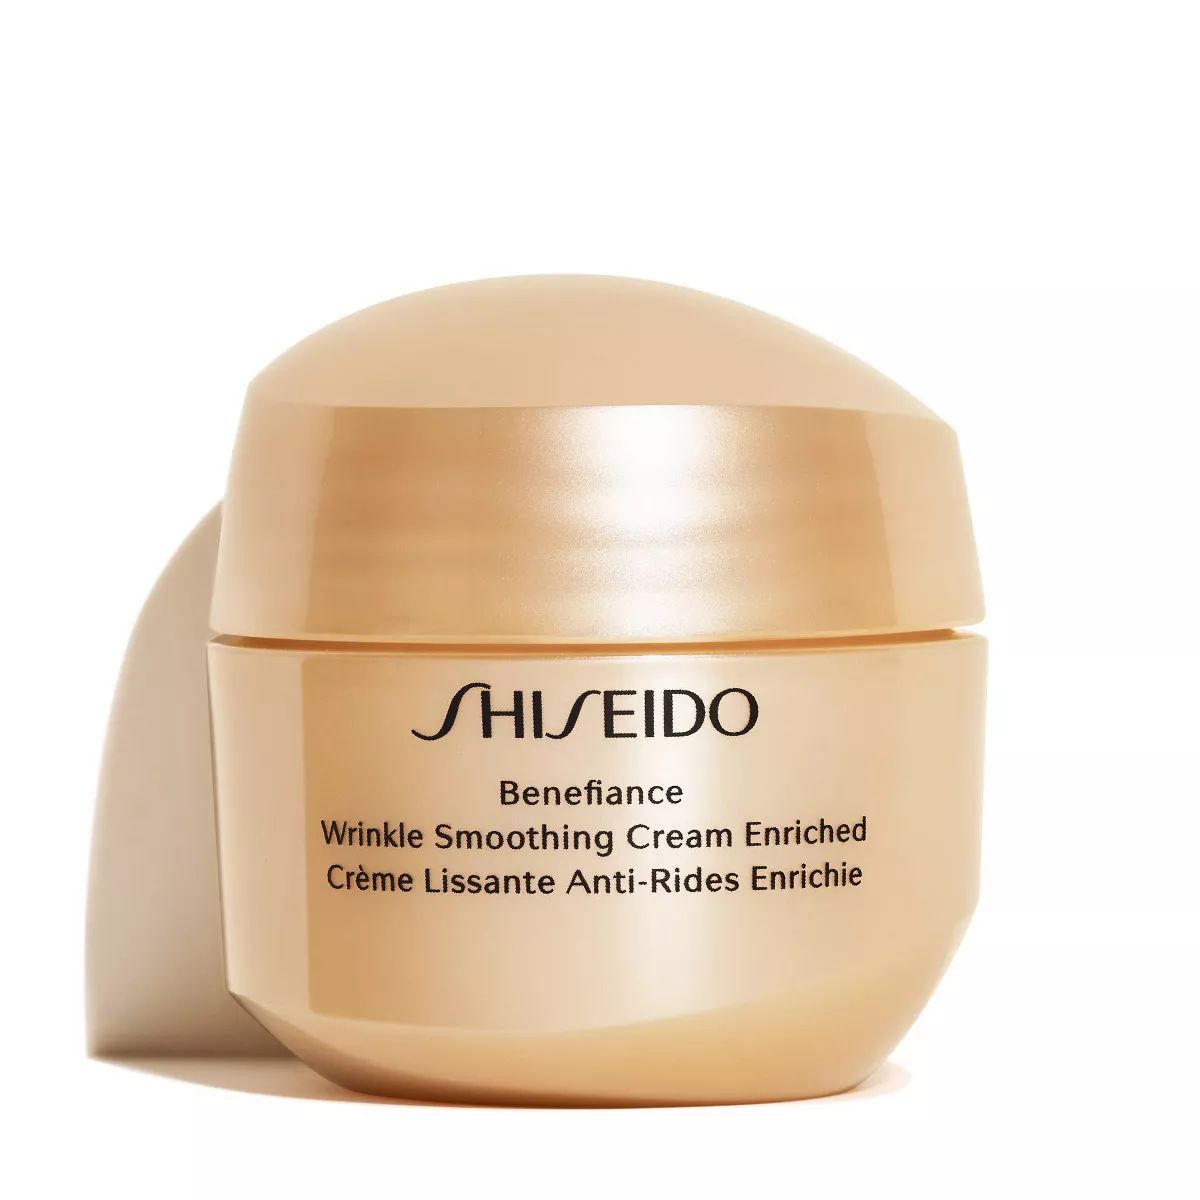 Shiseido Benefiance Wrinkle Smoothing Cream Enriched - Ulta Beauty | Target